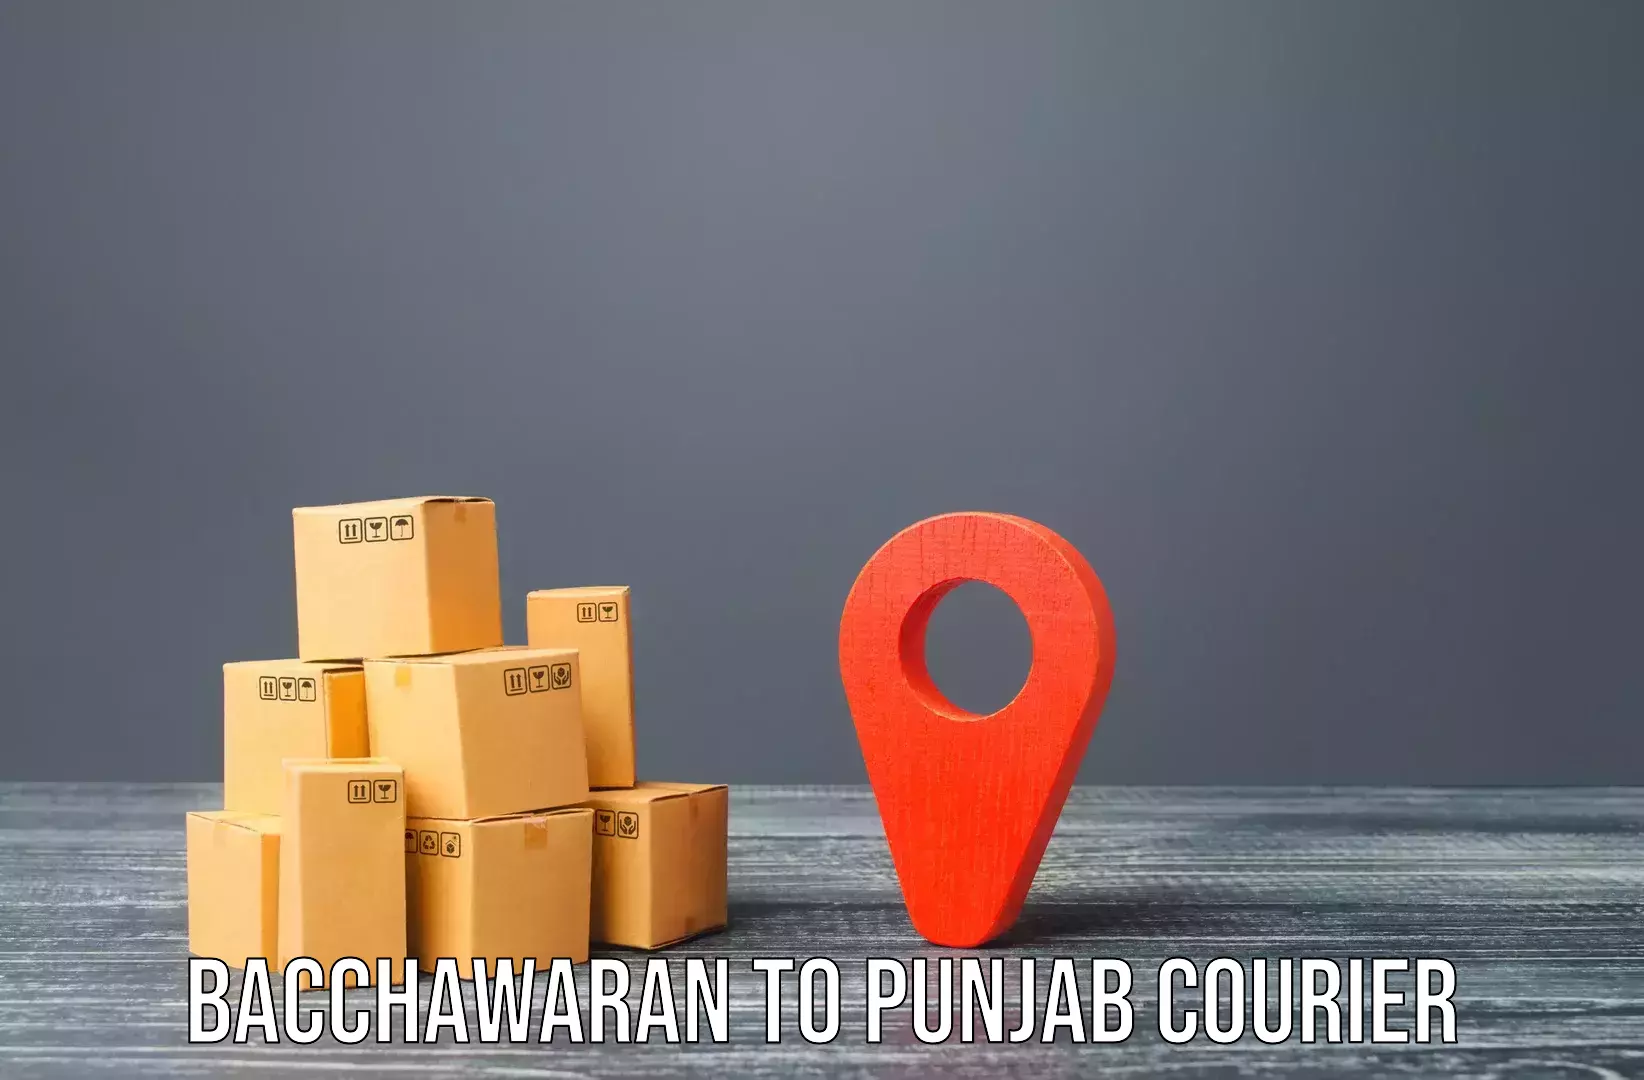 Home goods moving company Bacchawaran to Punjab